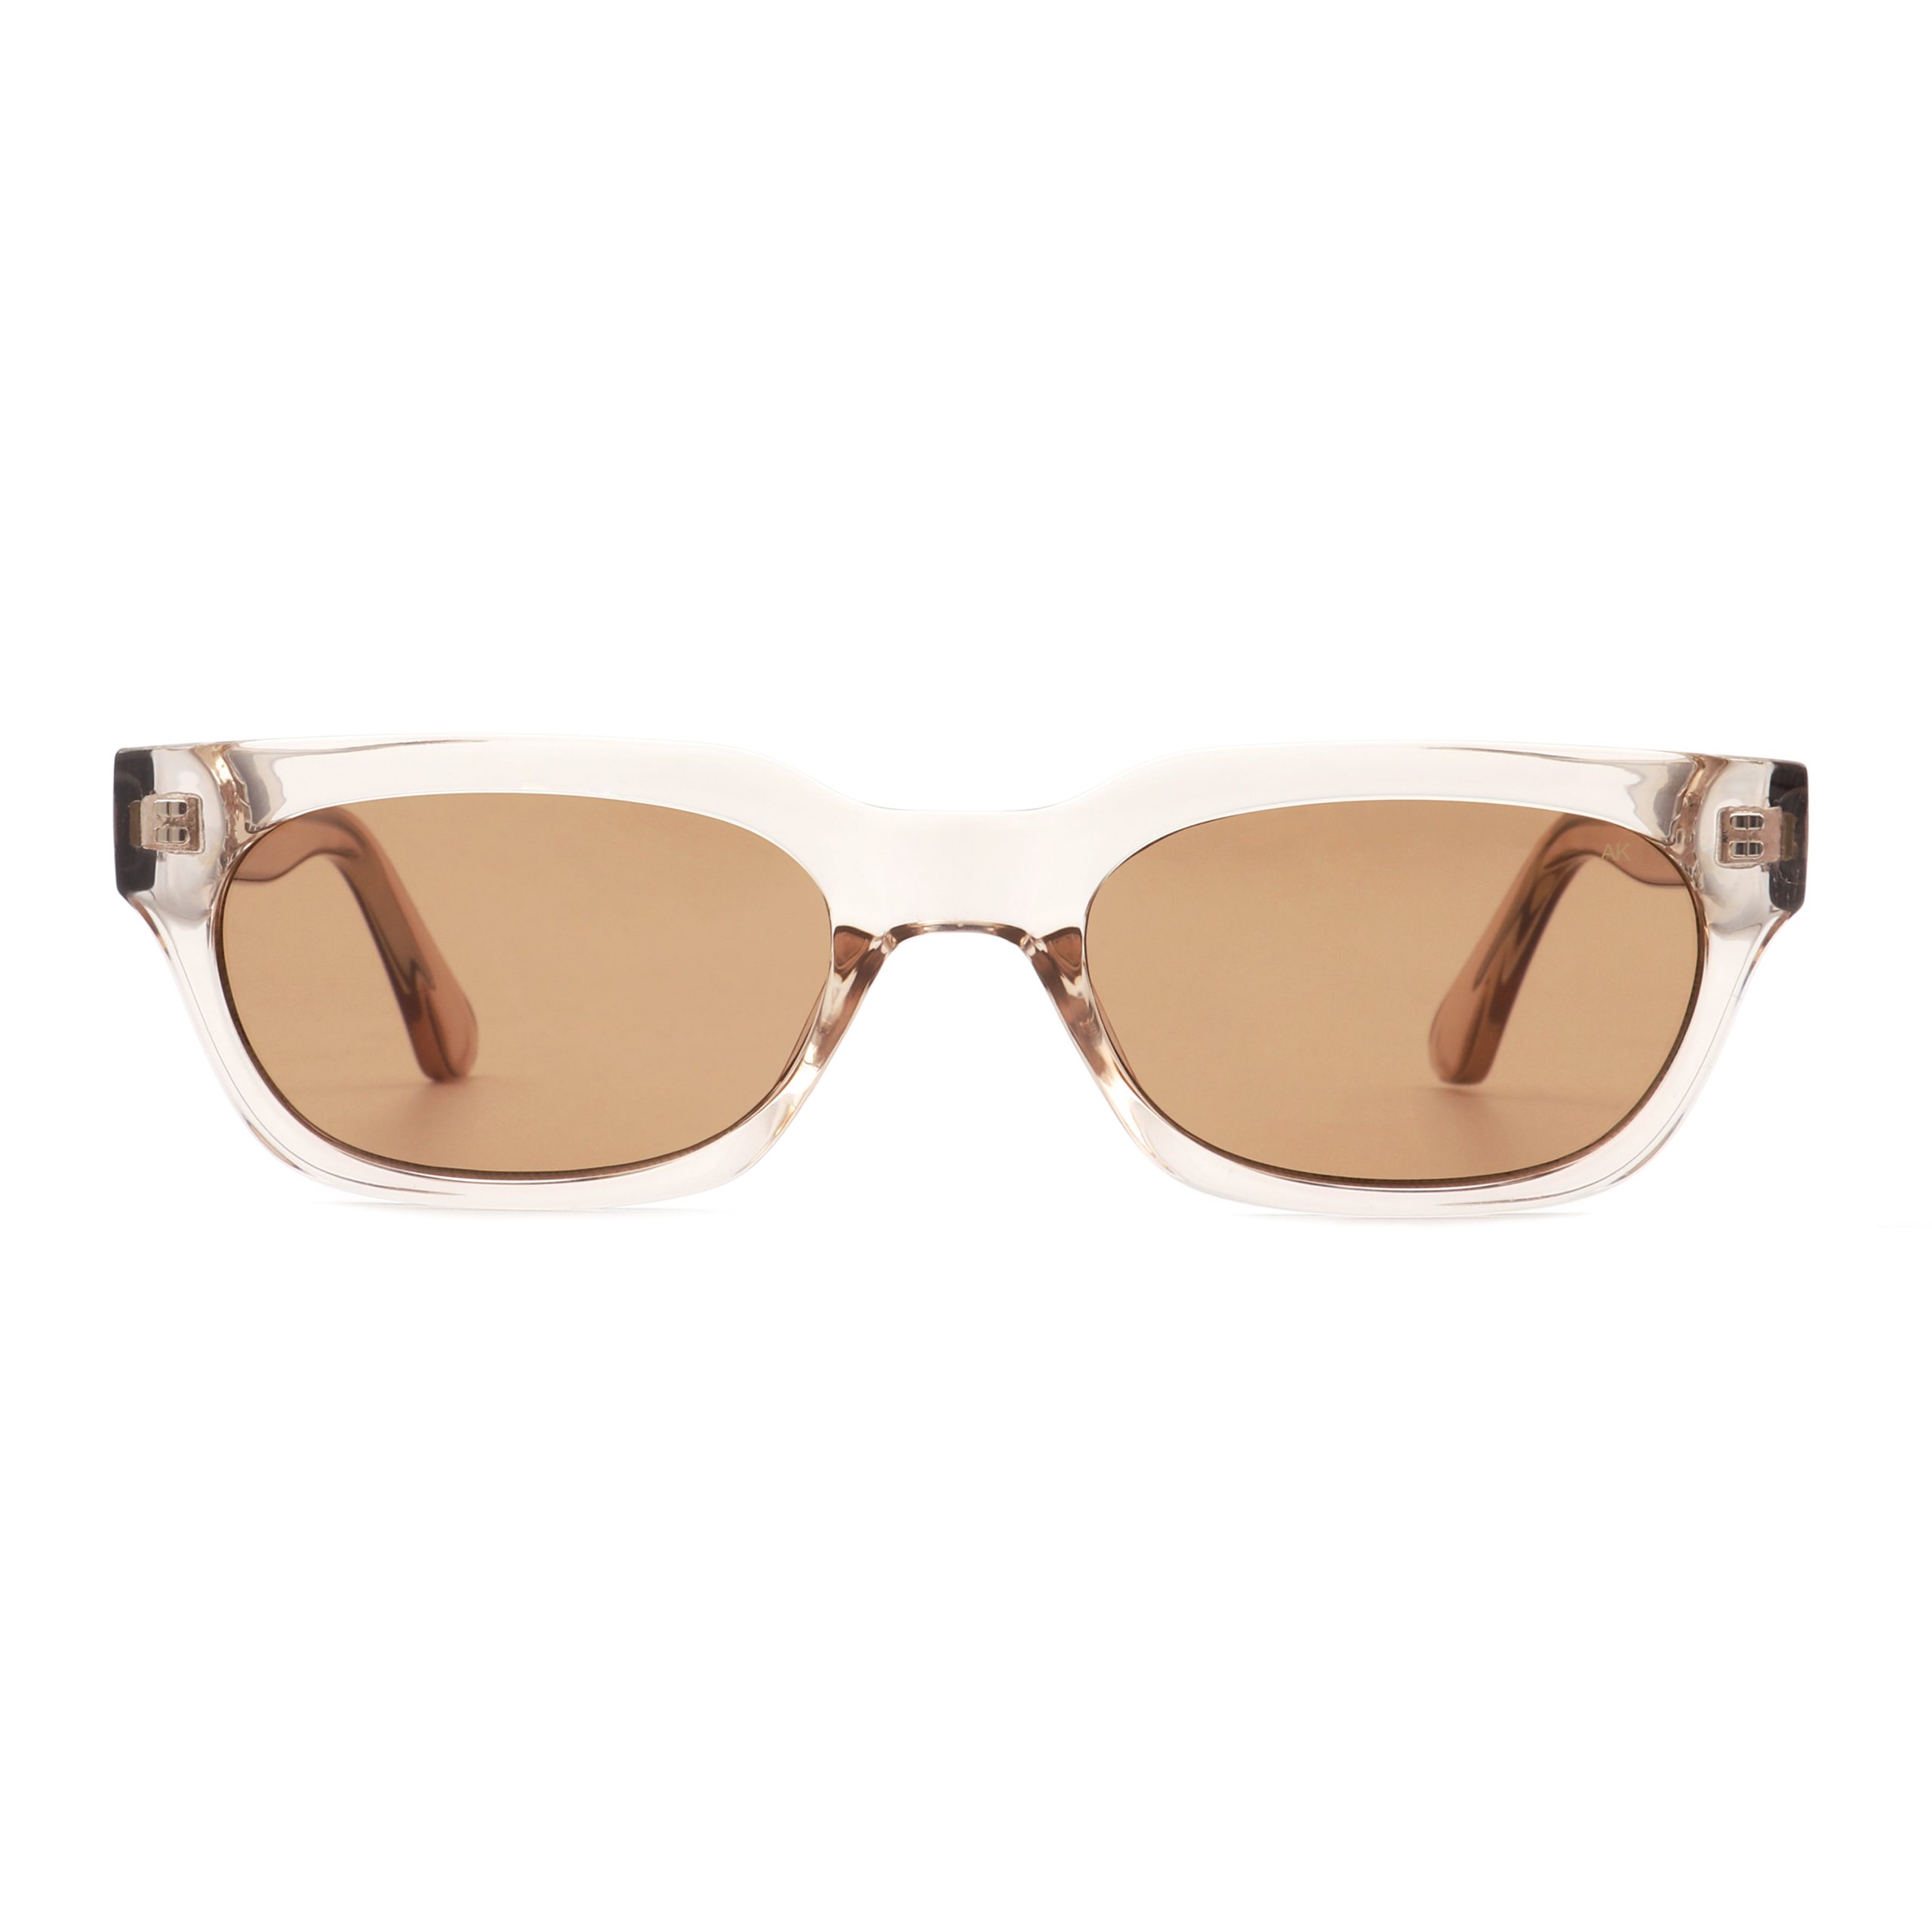 A.Kjaerbede zonnebril model BROR AKsunnies bril sunglasses Akjaerbede eyewear 29,95